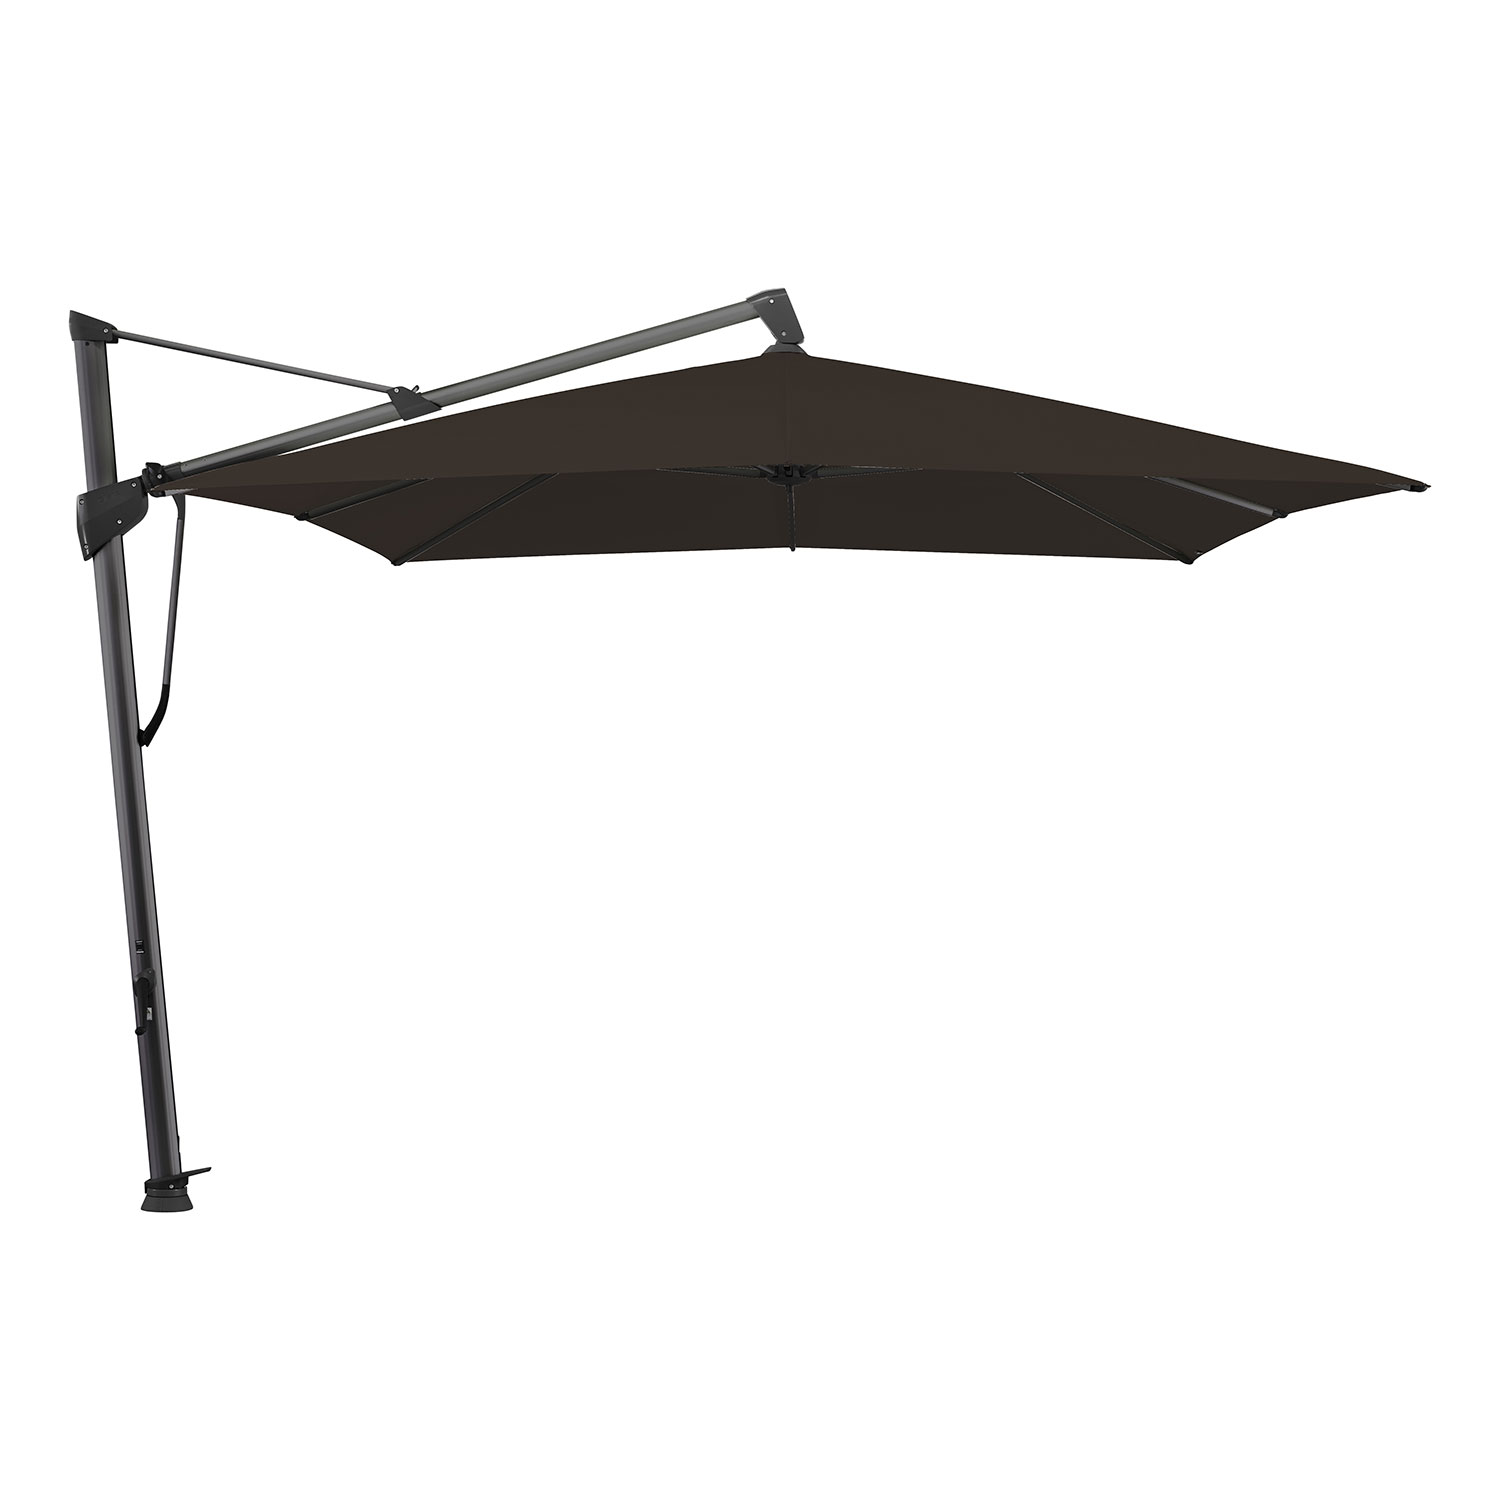 Glatz Sombrano S+ frihängande parasoll 400×300 cm kat.4 antracite alu / 408 black